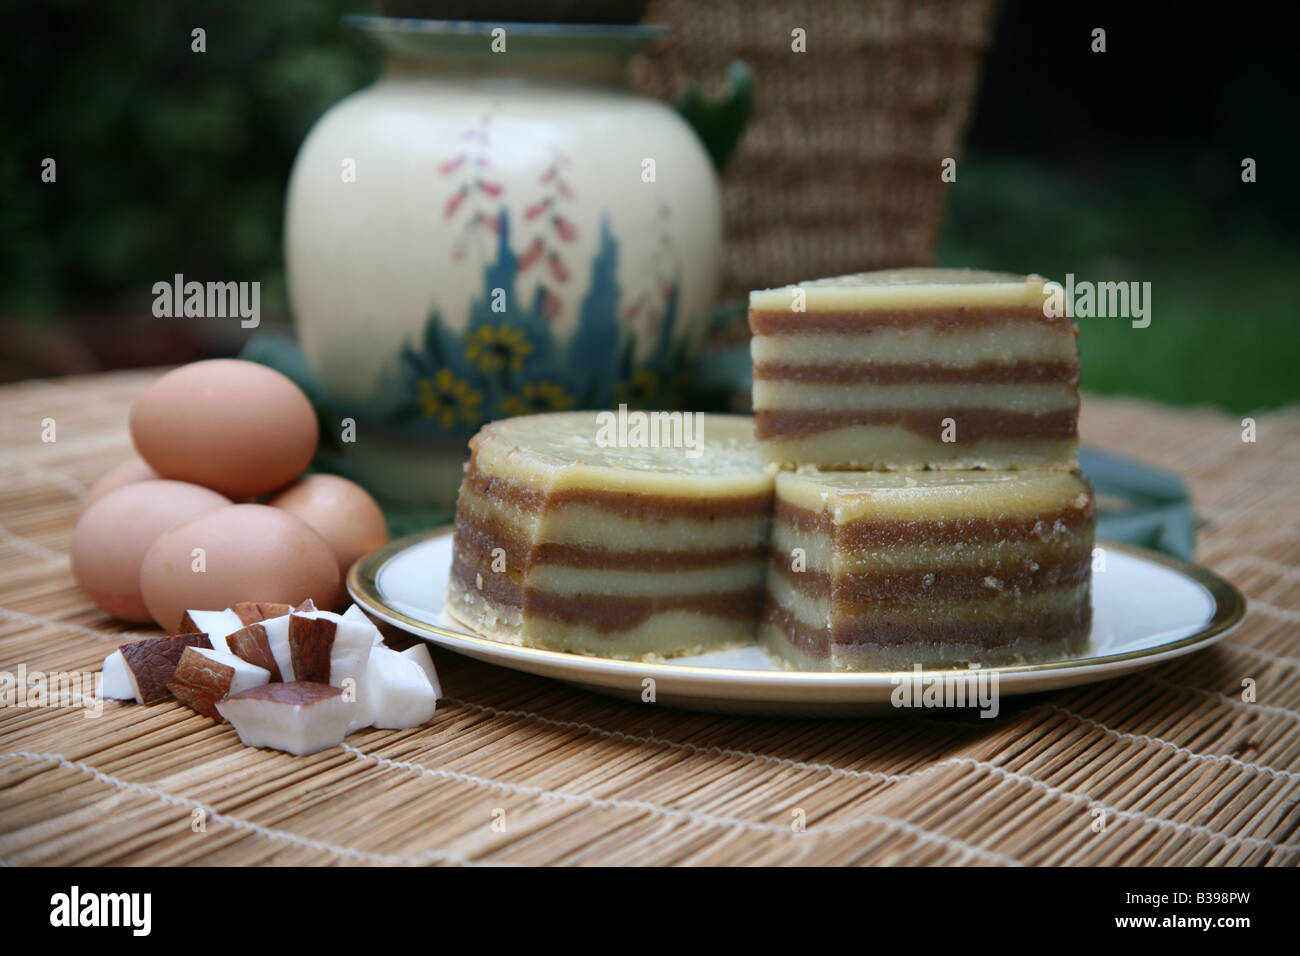 Goan bebinca (Layered coconut cake) | Recipe | Kitchen Stories